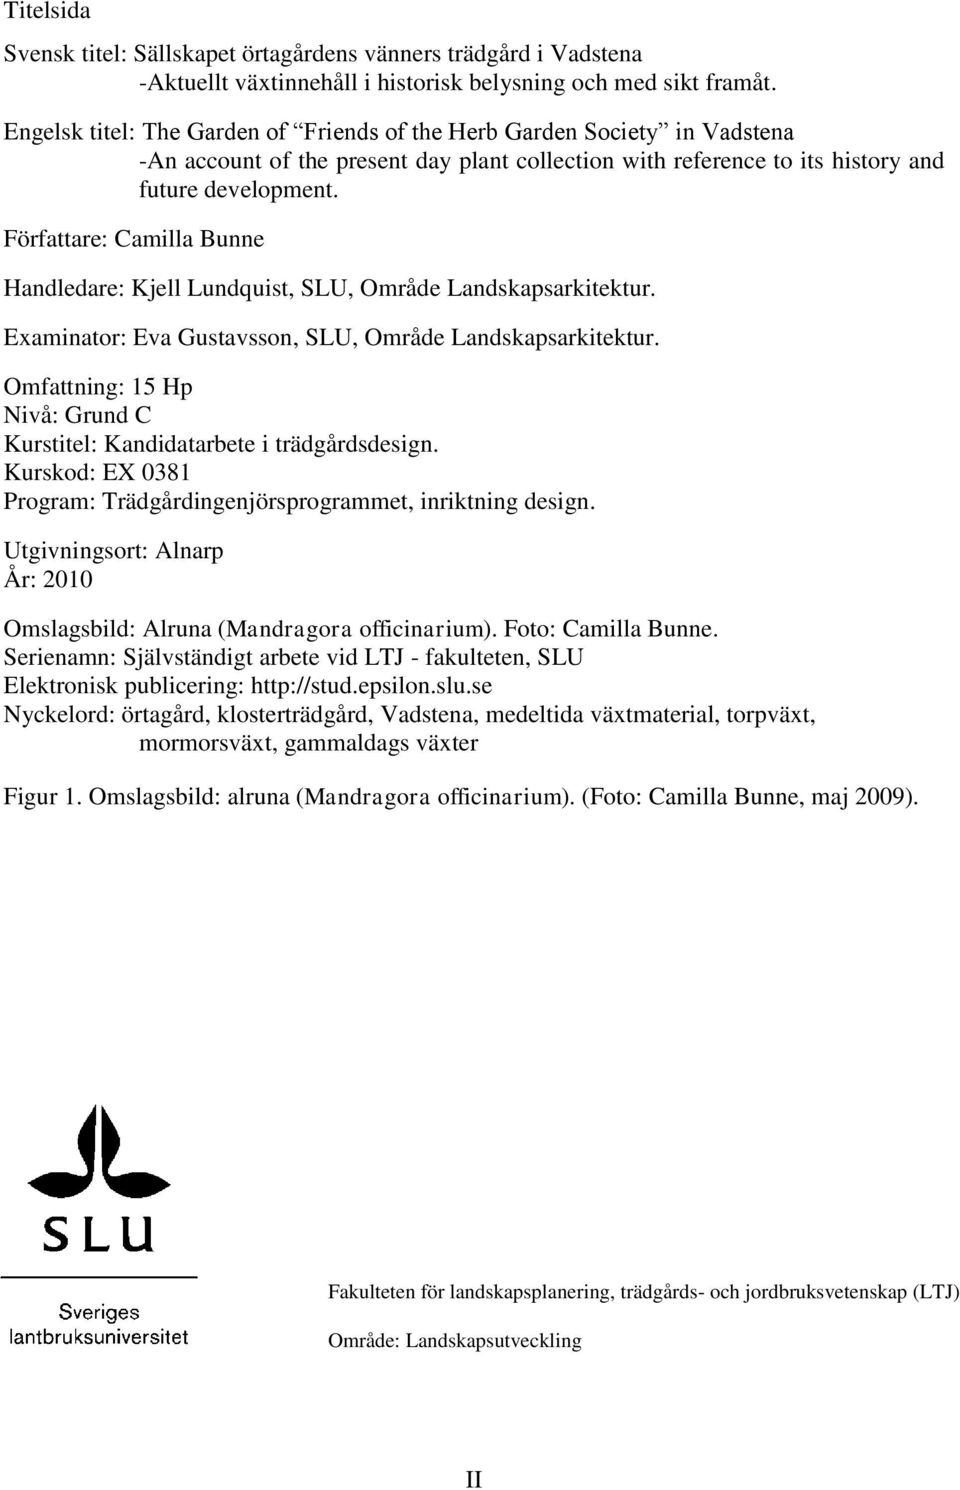 Författare: Camilla Bunne Handledare: Kjell Lundquist, SLU, Område Landskapsarkitektur. Eaminator: Eva Gustavsson, SLU, Område Landskapsarkitektur.